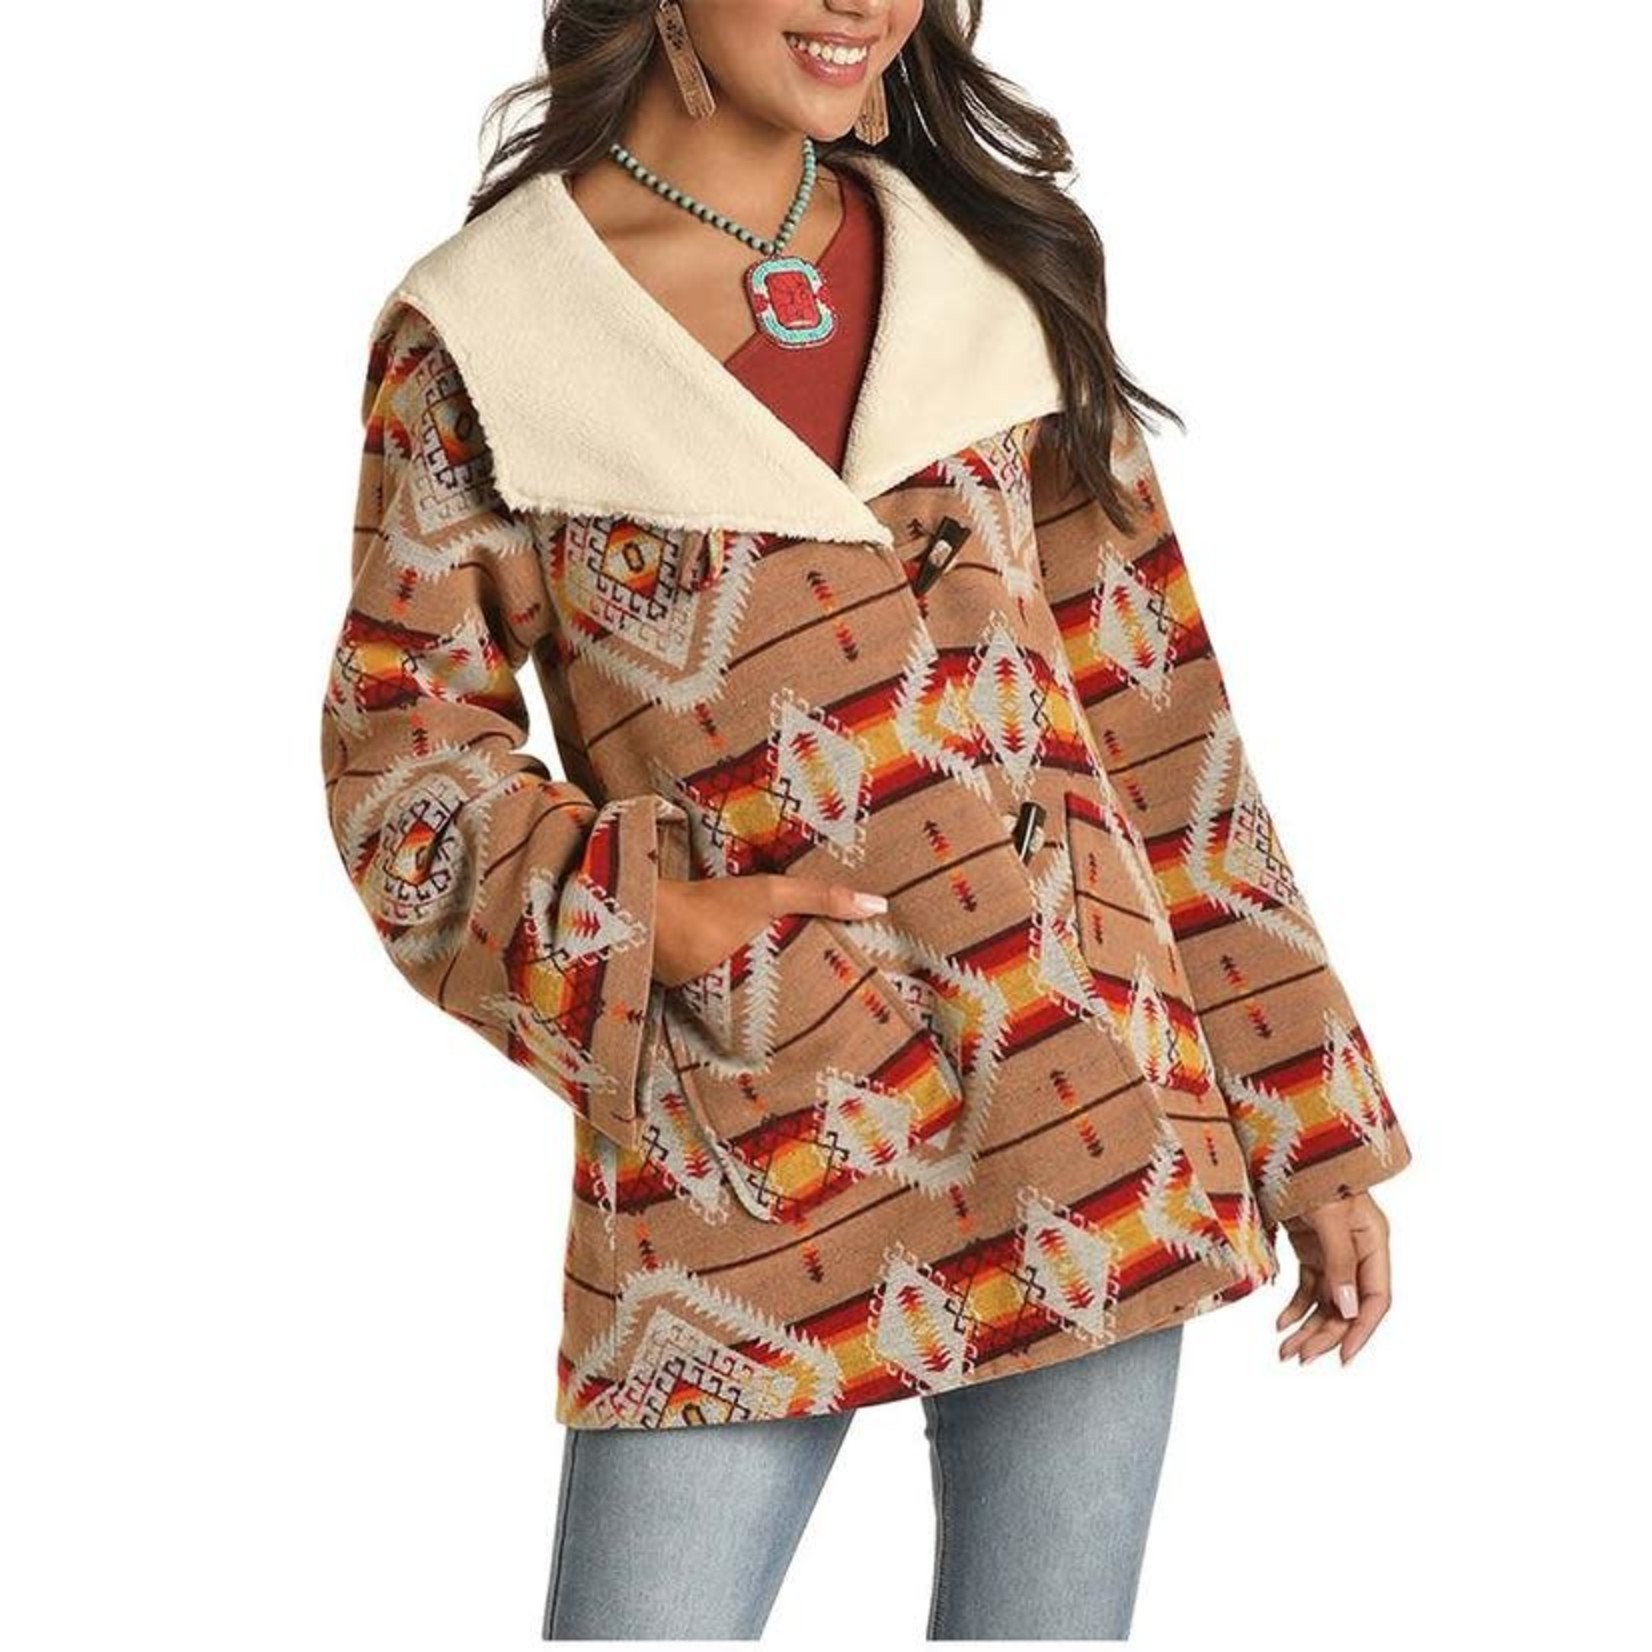 Powder River Outfitter Ladies Tan Aztec Cape Coat